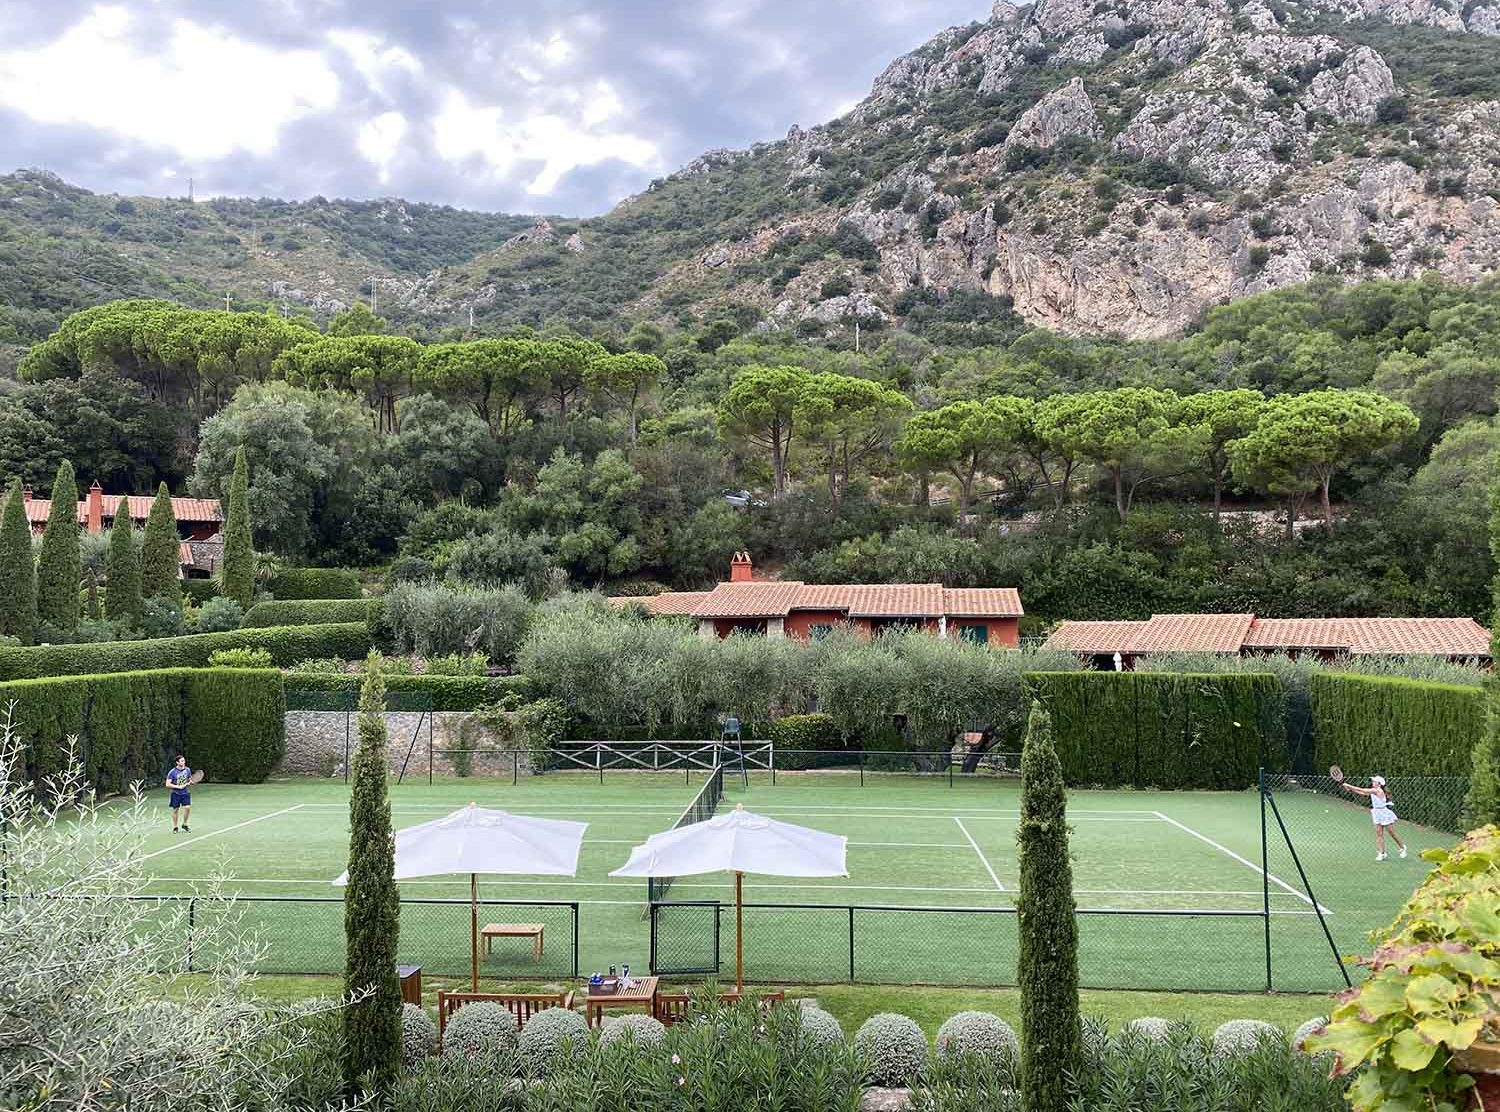 Il Pellicano The most beautiful tennis court in the world.